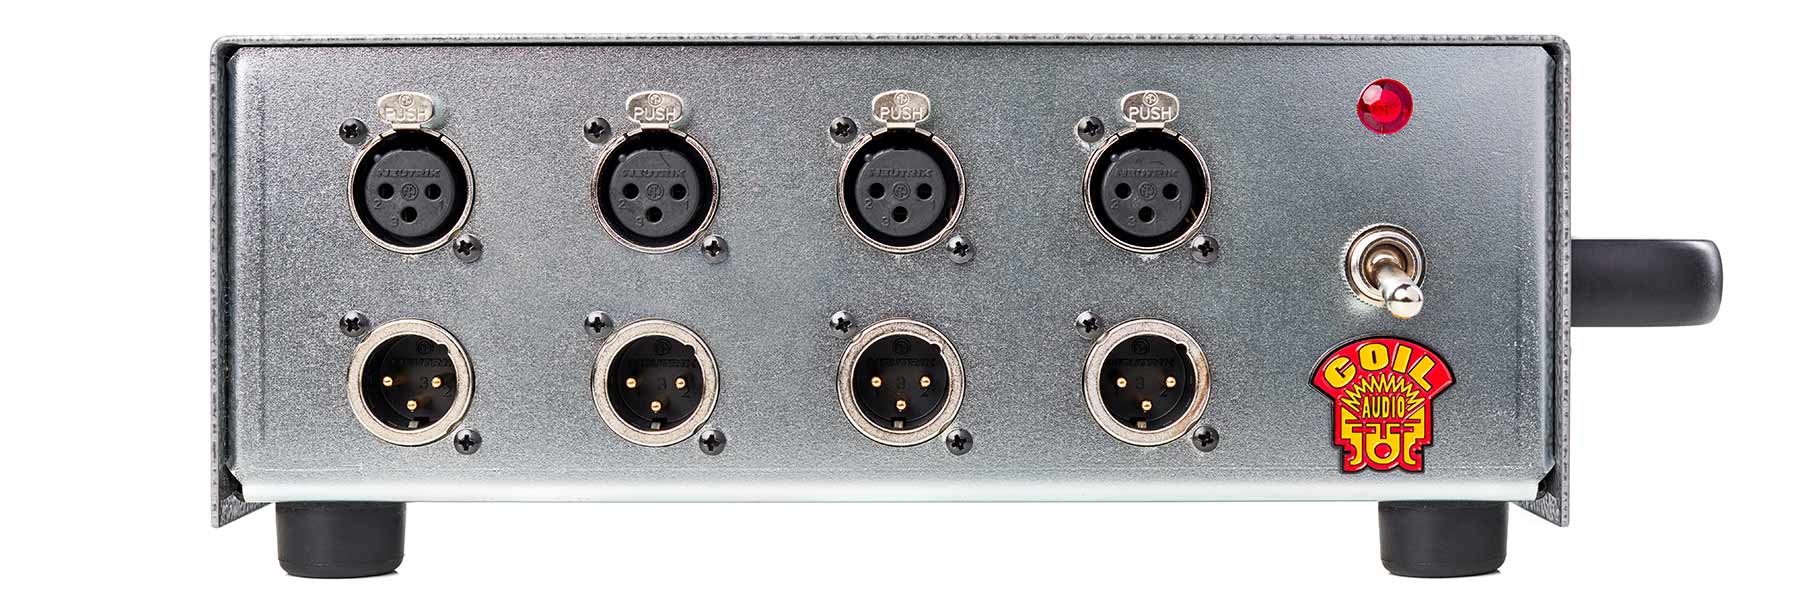 Audio CP-448 4 channel Portable Phantom Power Supply